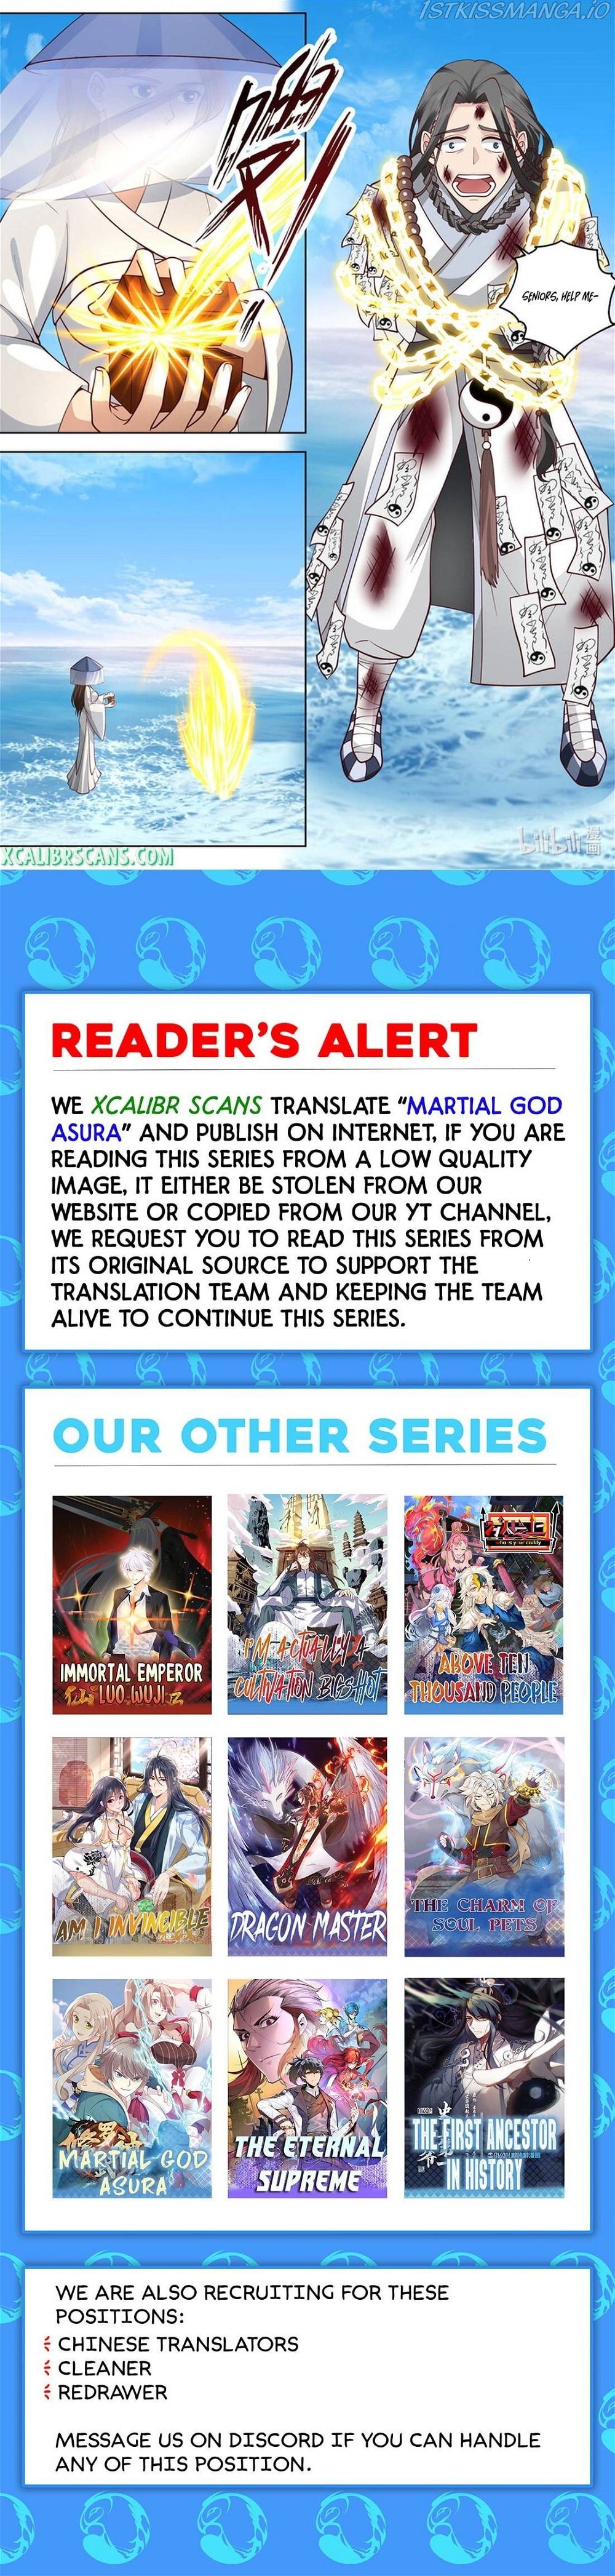 Martial God Asura Chapter 613 - Page 10